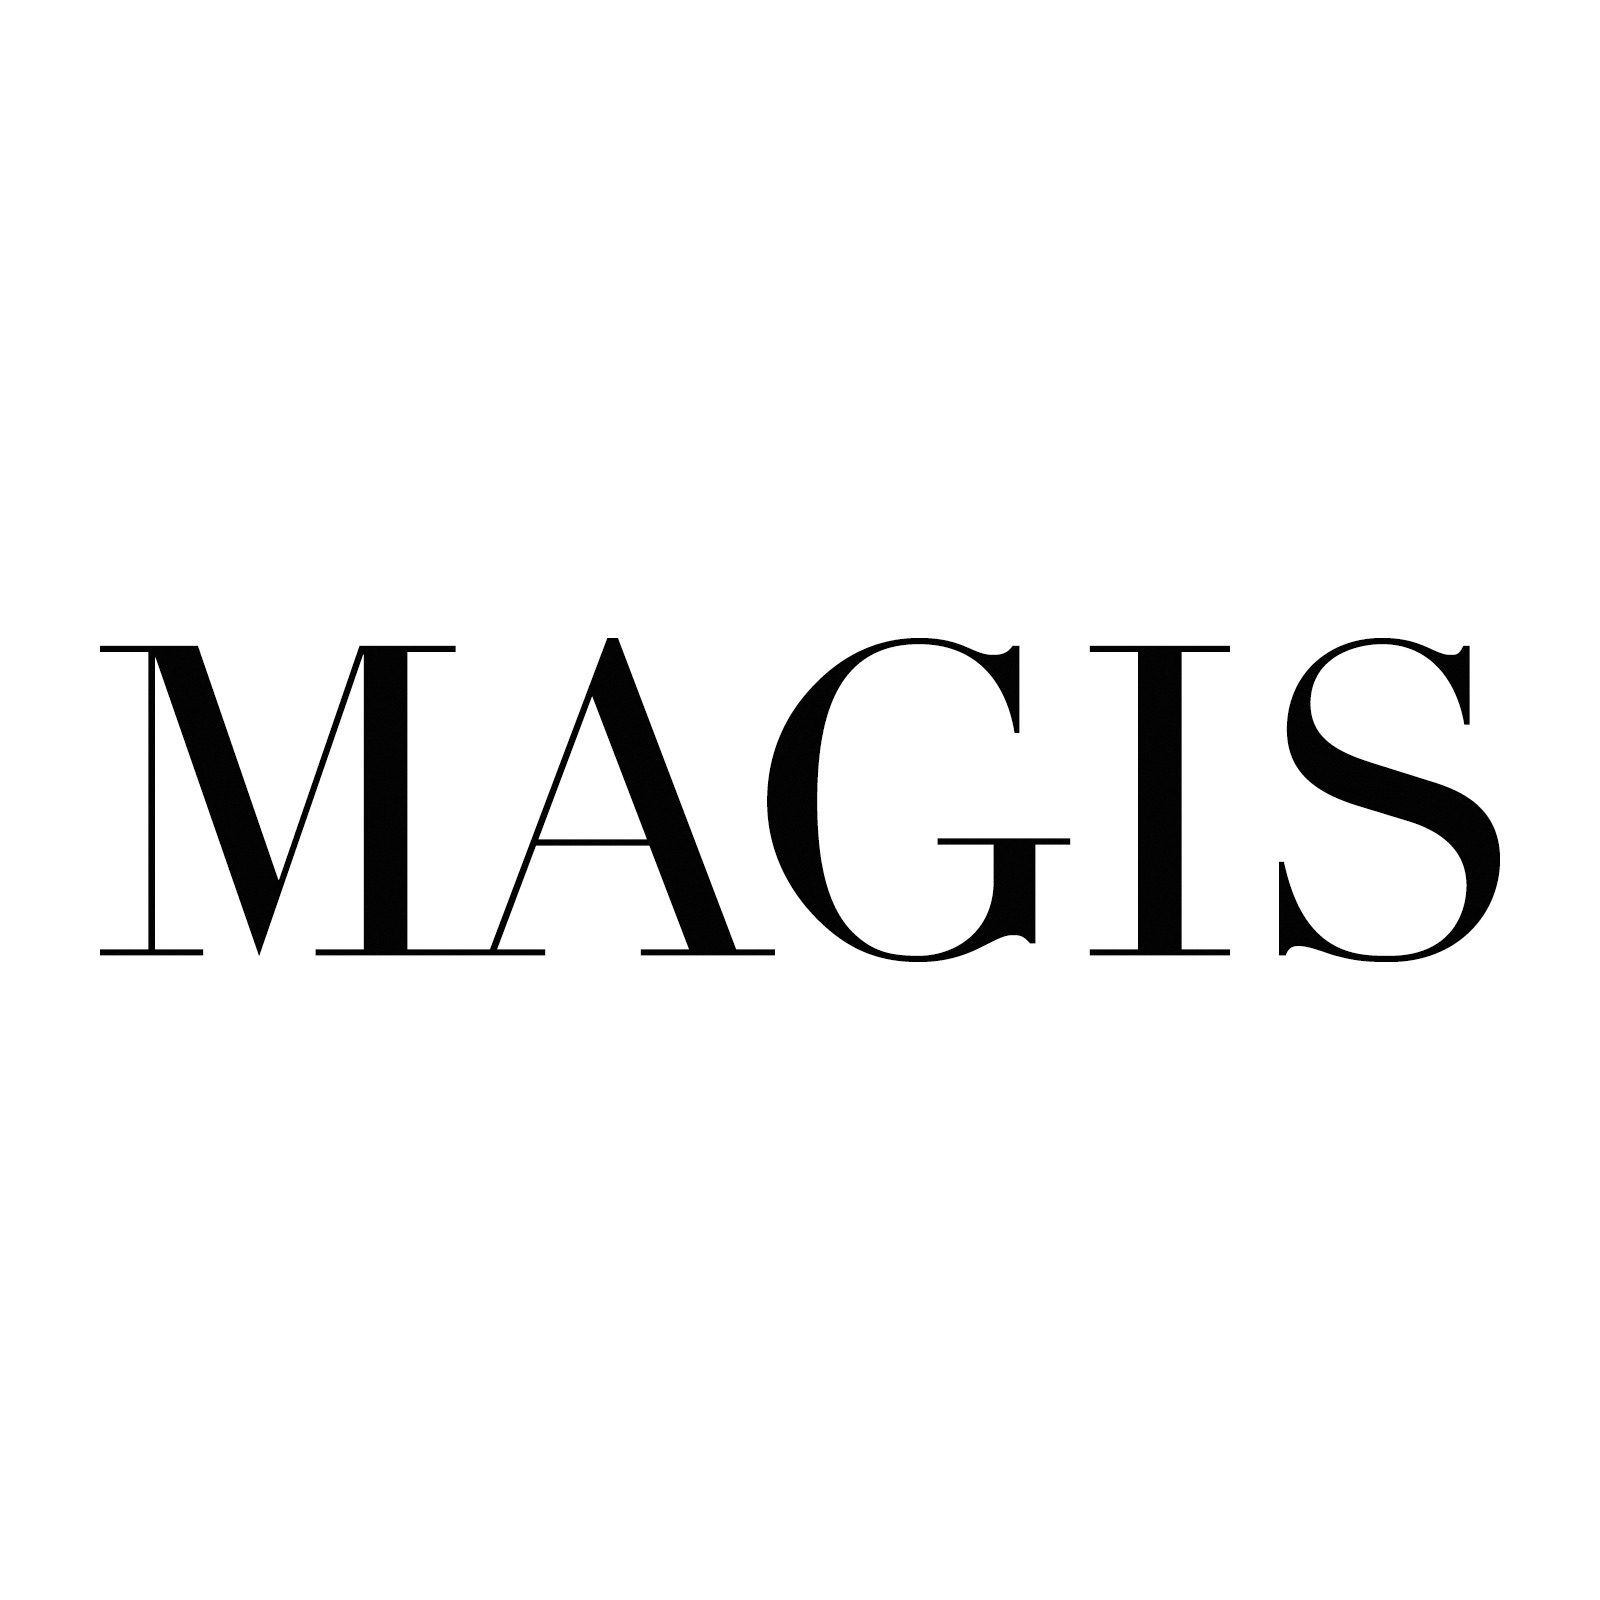 The Magis logo.